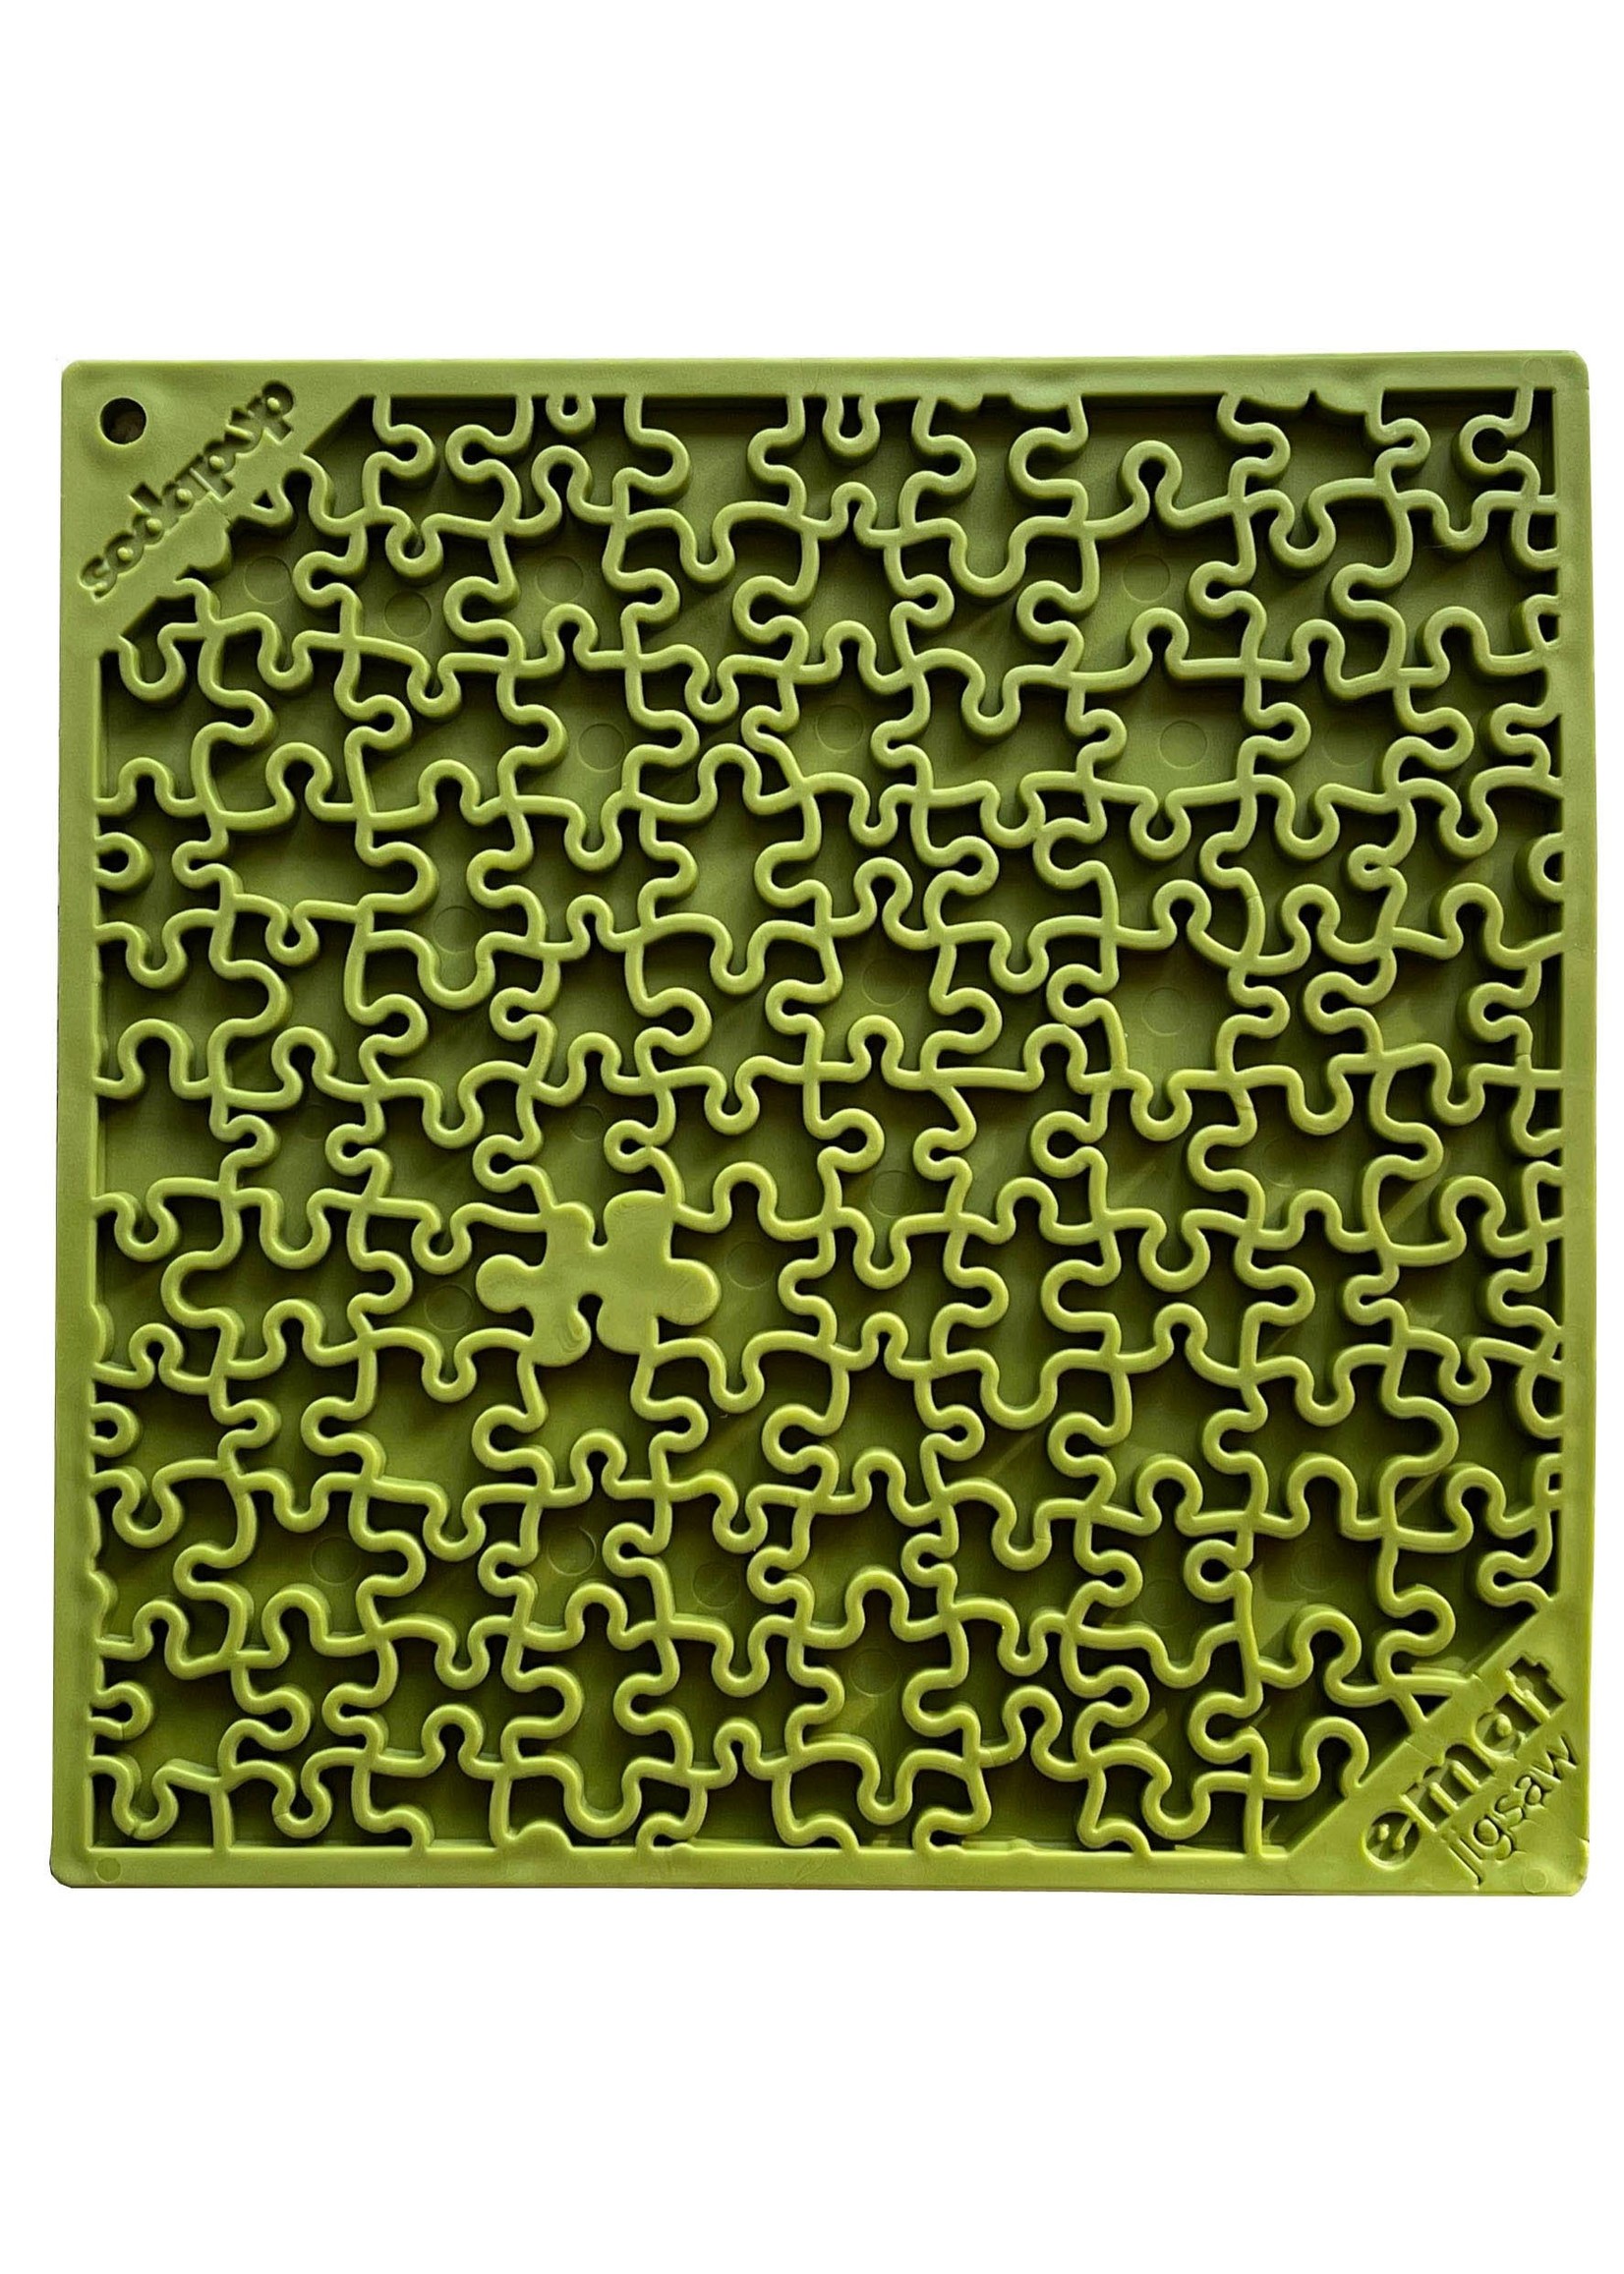 SodaPup Jigsaw Design Emat Enrichment Licking Mat - Olive